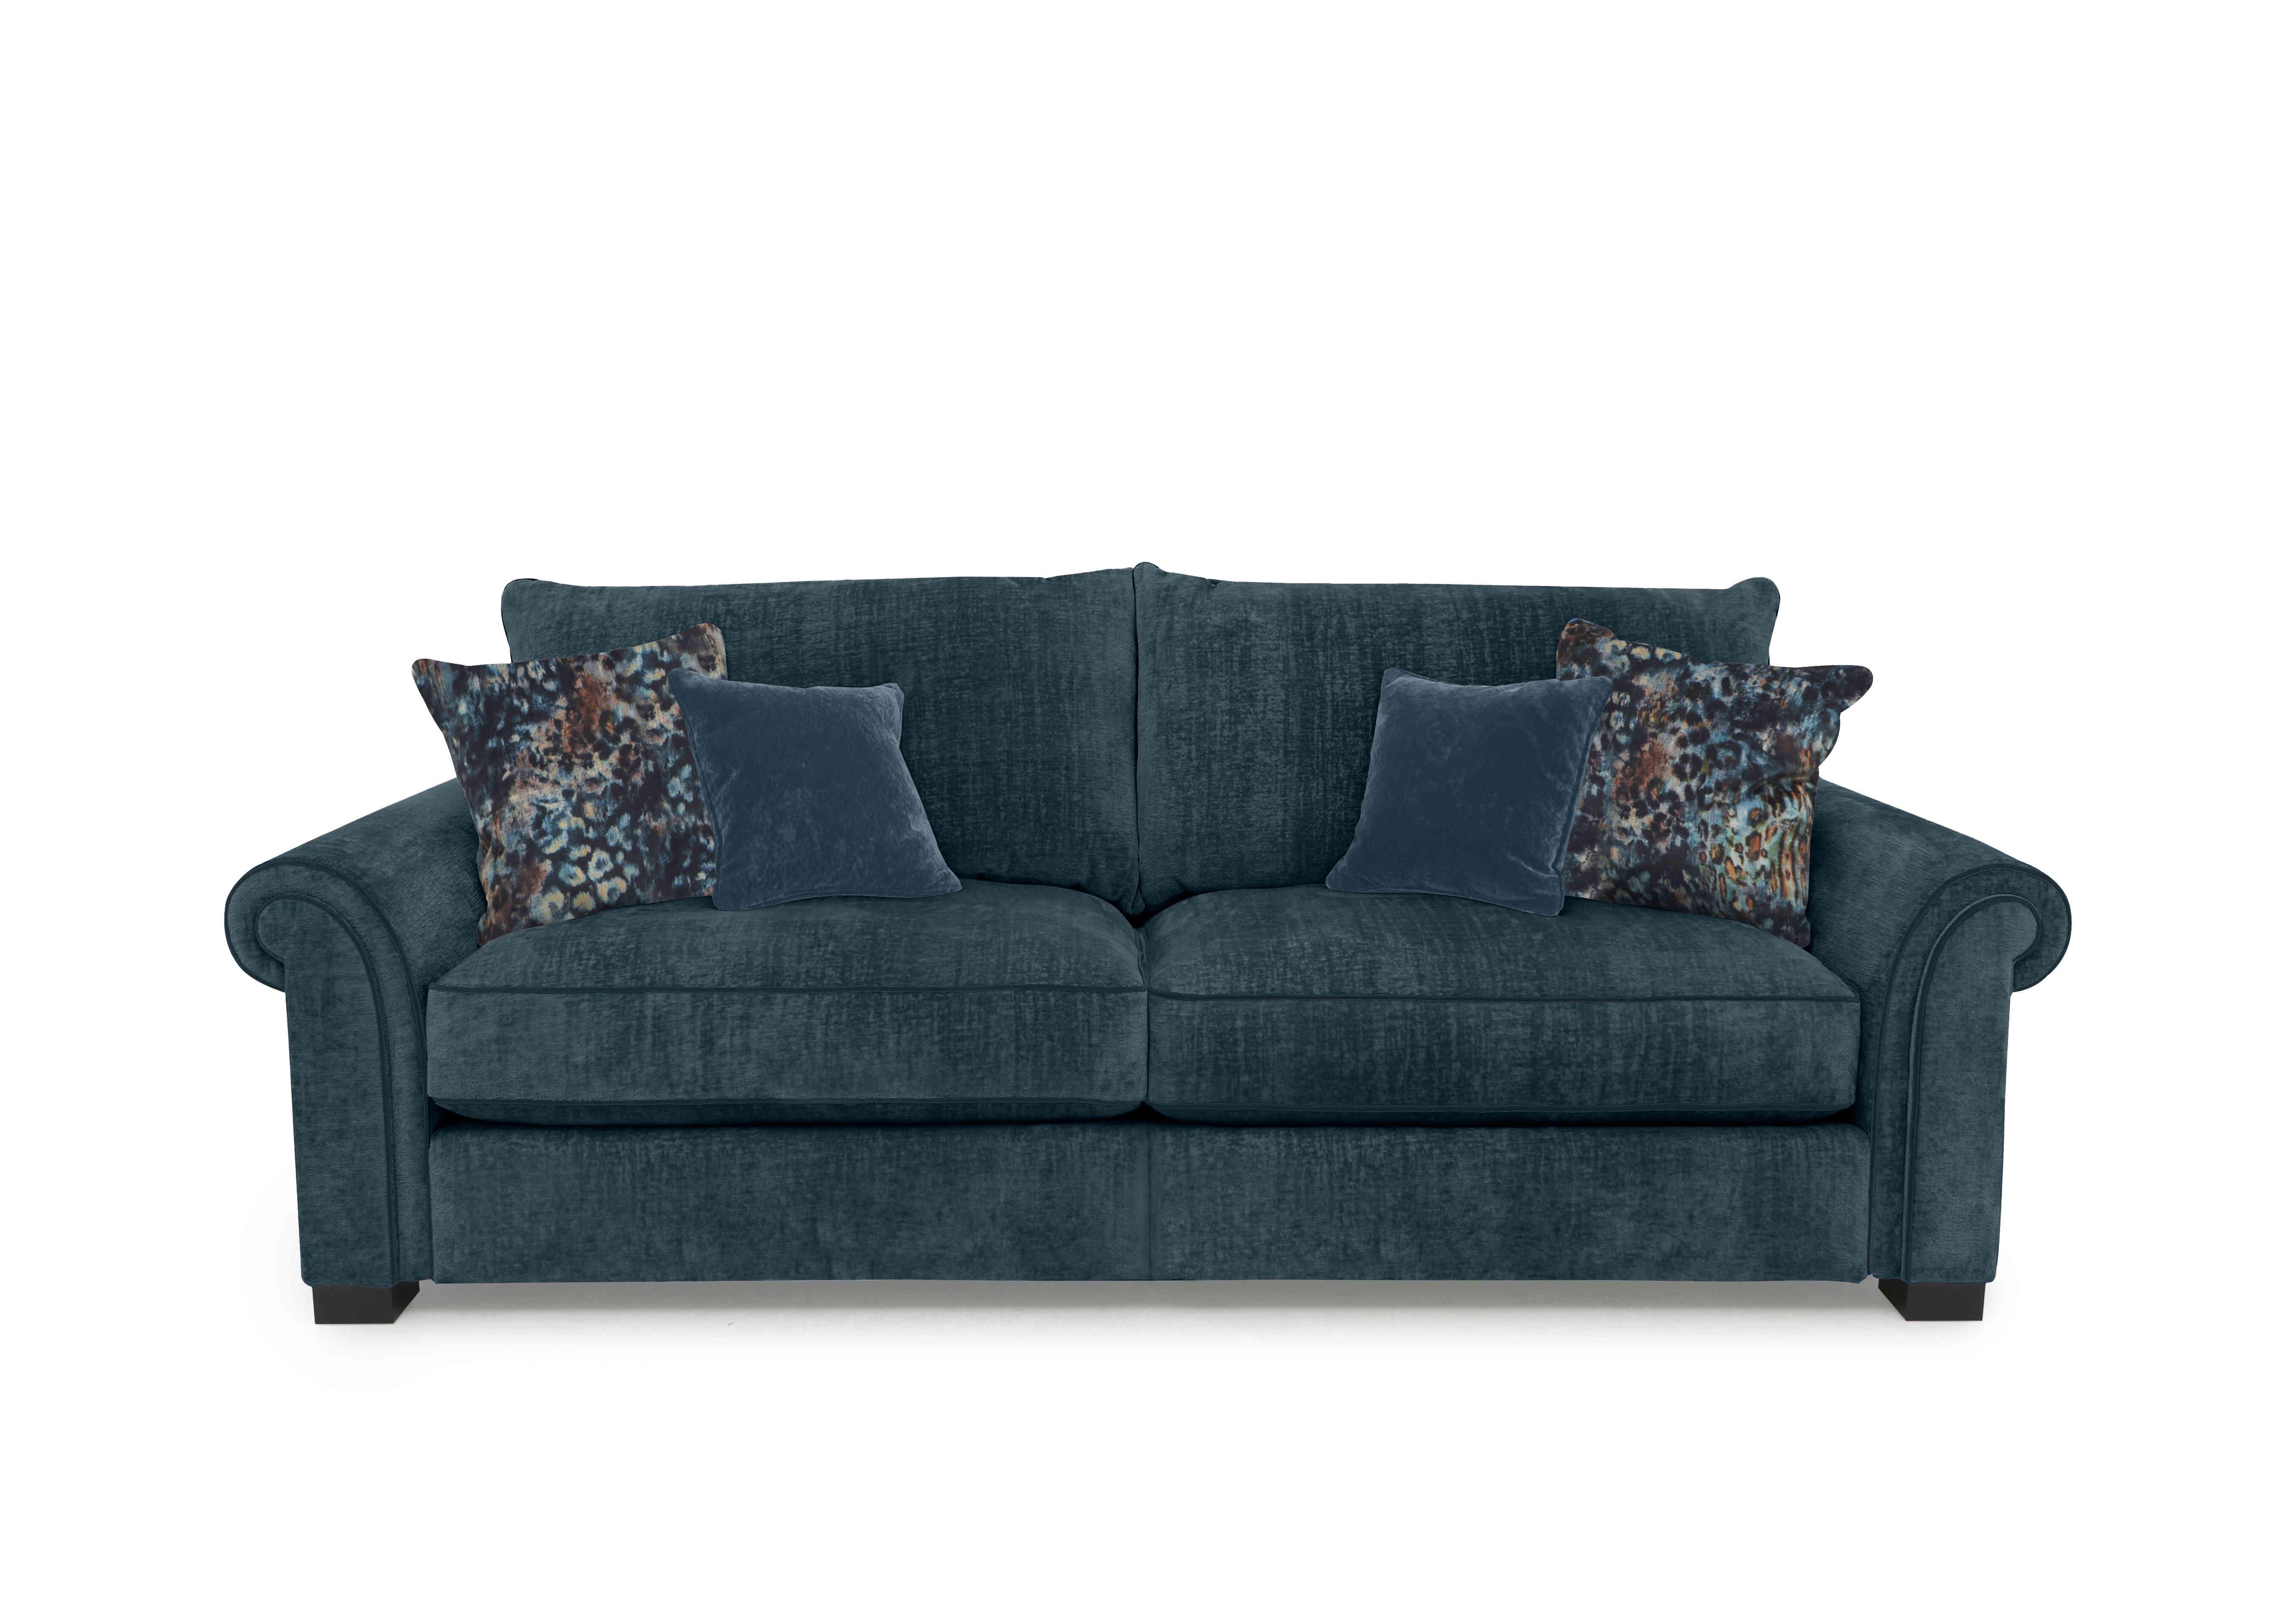 Modern Classics St James Park 3 Seater Sofa in Remini Petrol Blue Sp Mf on Furniture Village